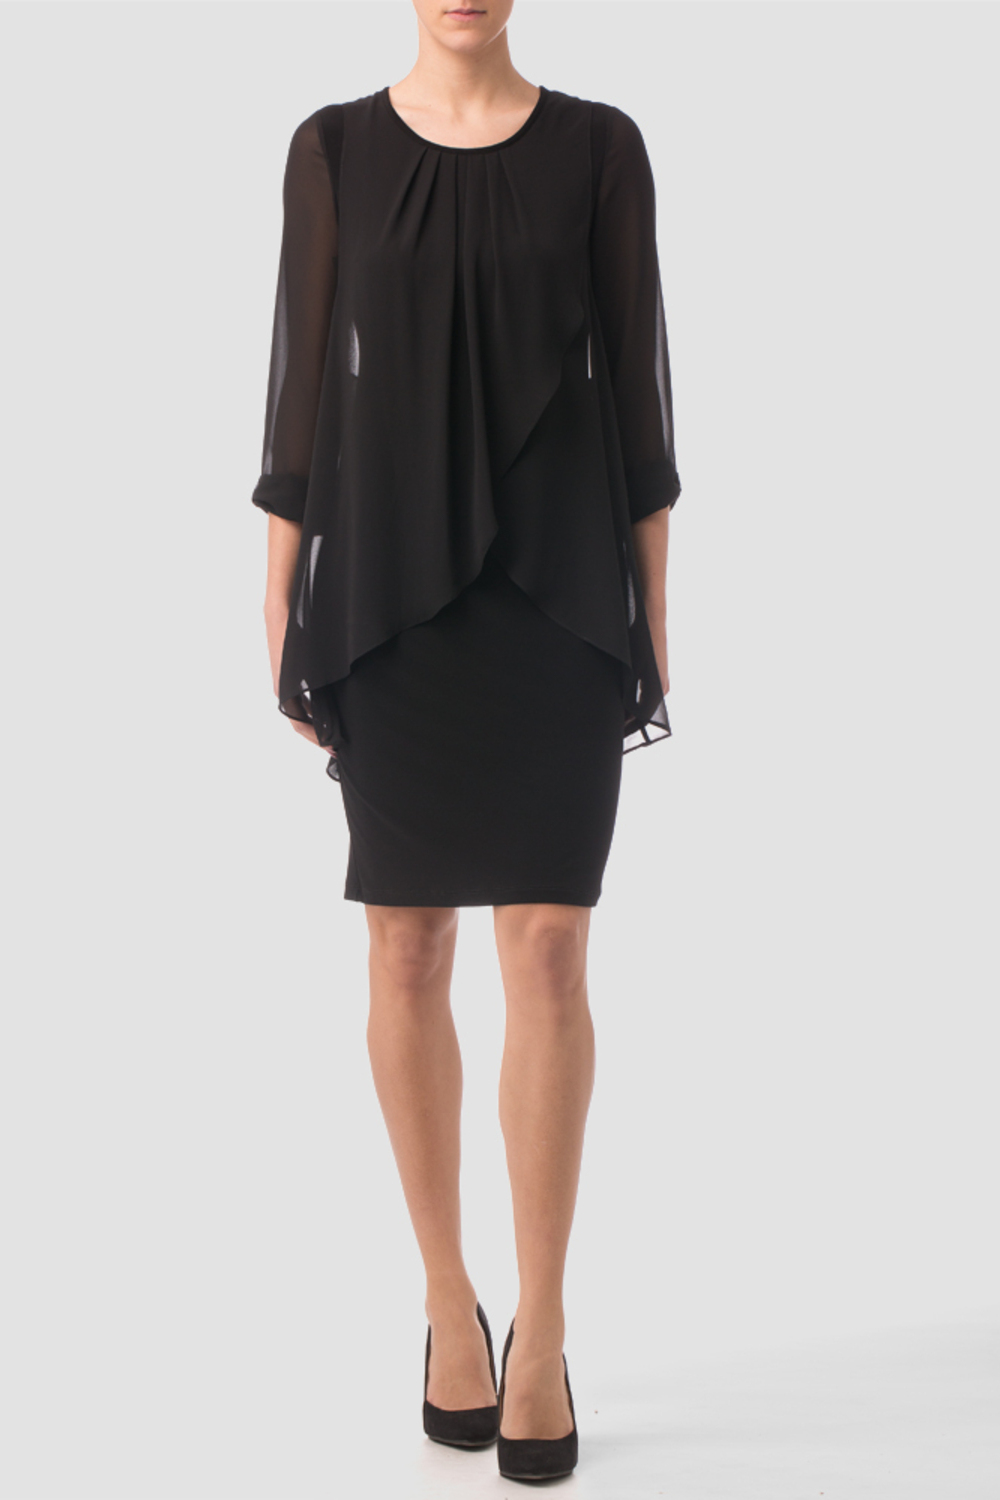 Joseph Ribkoff robe style 163262. Noir/noir